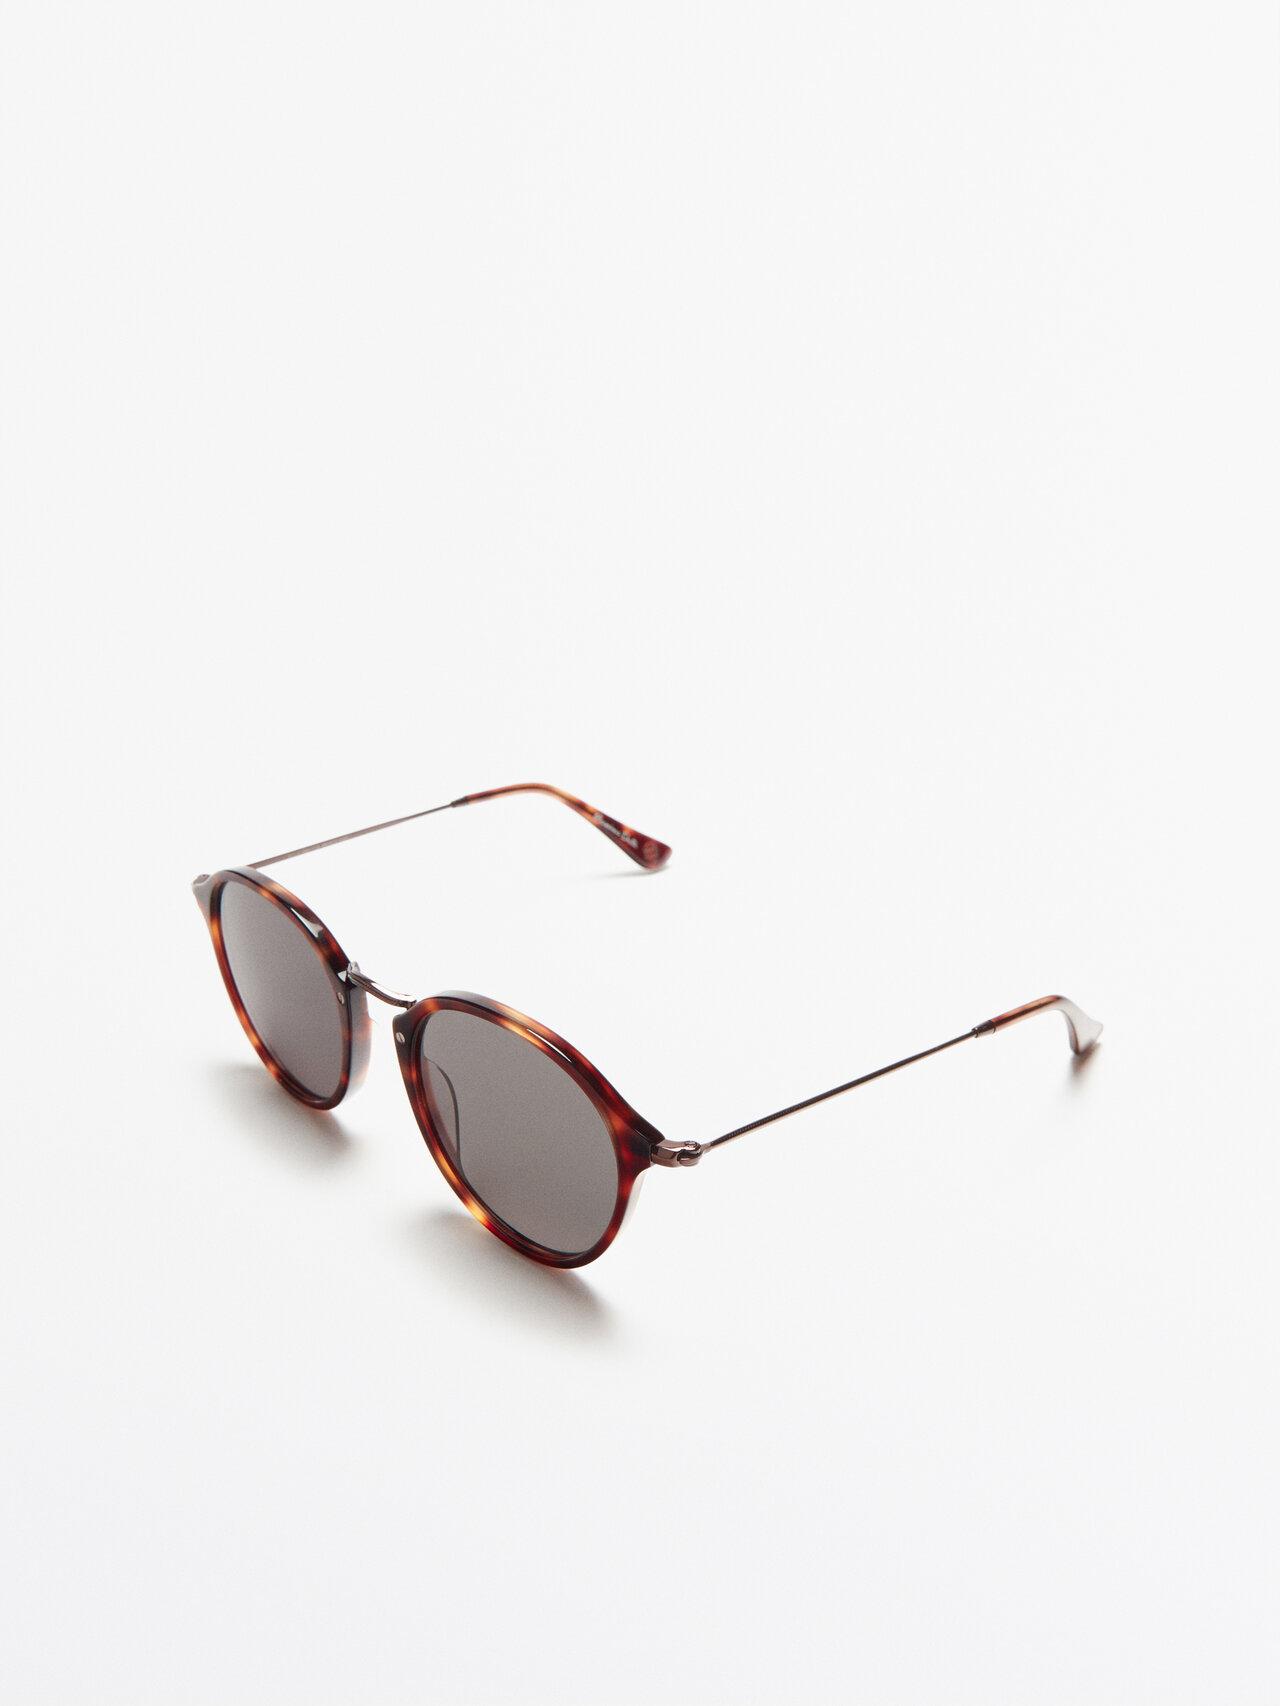 MASSIMO DUTTI Round Sunglasses With Metal Bridge for Men | Lyst